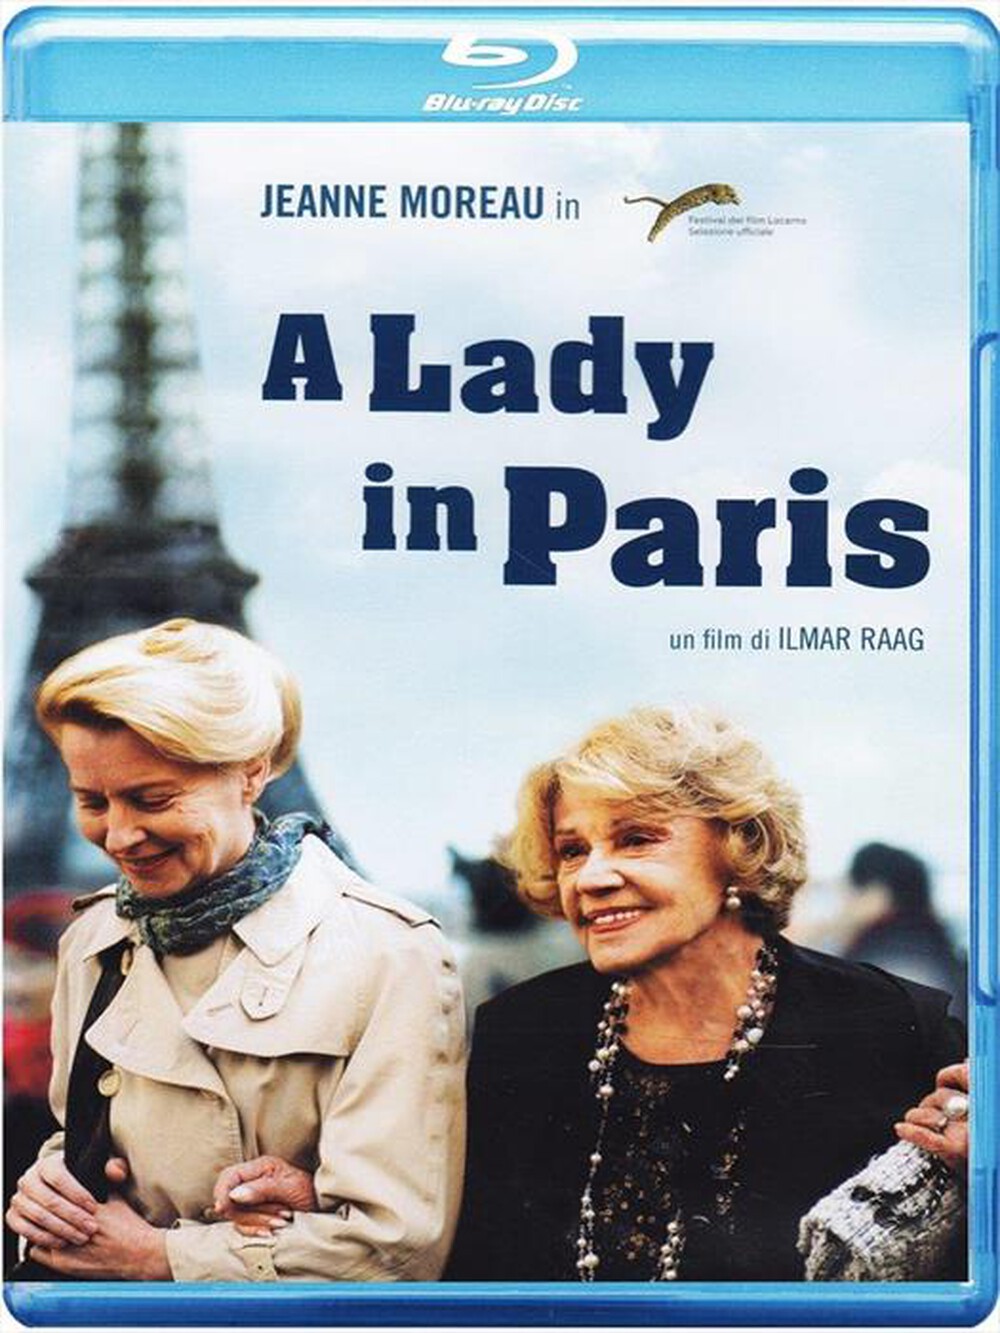 "01 DISTRIBUTION - Lady In Paris (A)"